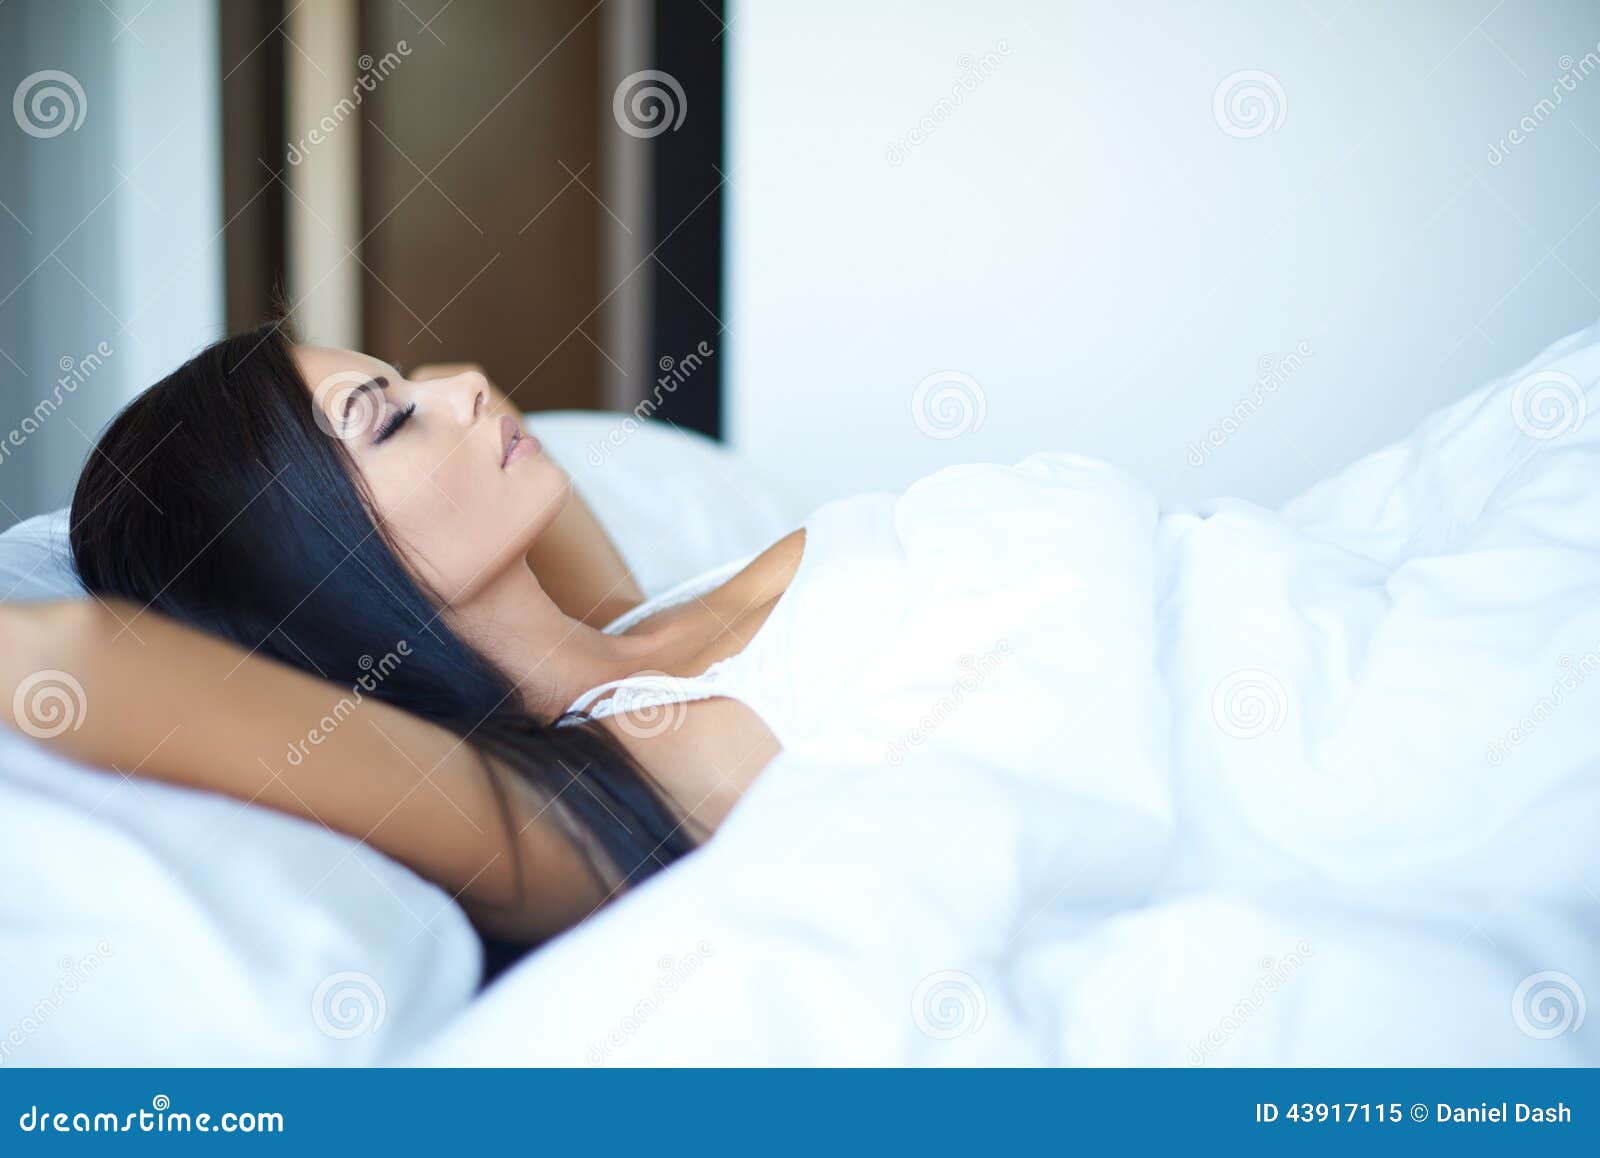 Woman Sleeping On Back